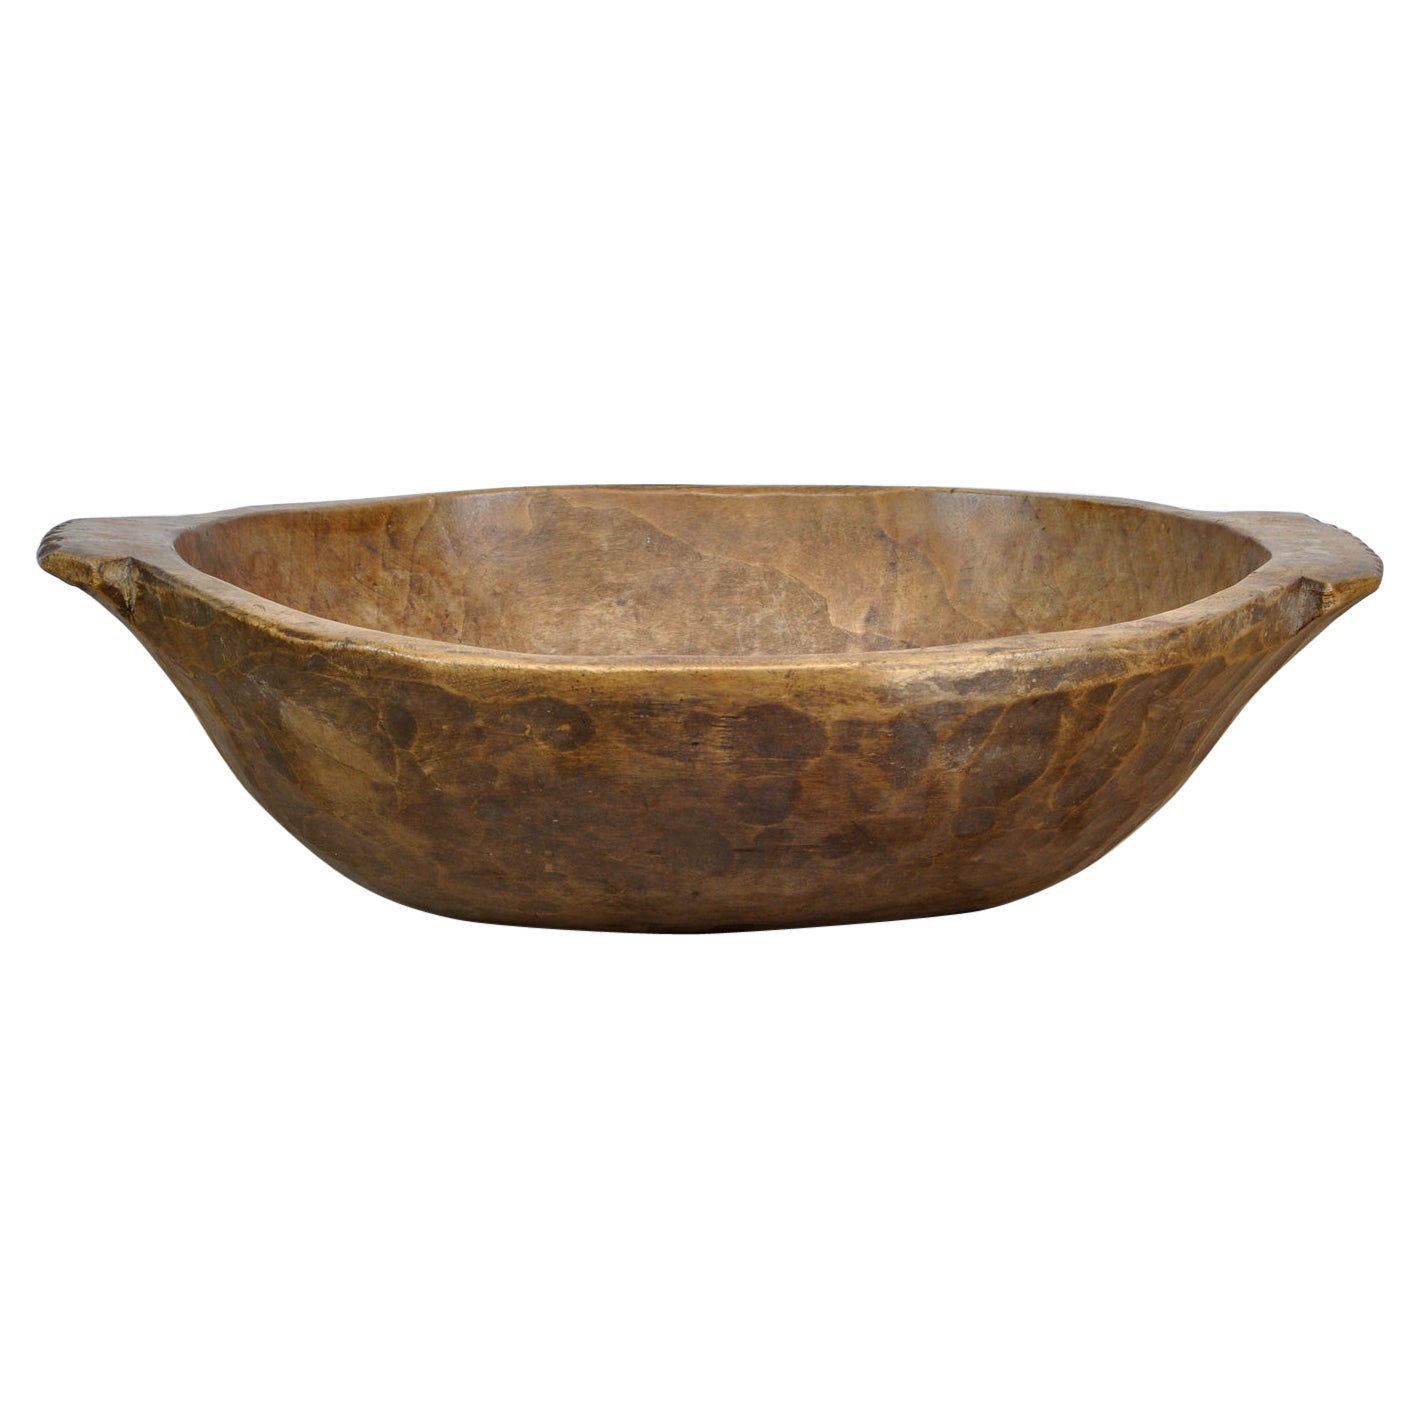 Handmade Wooden Dough Bowl, Early 1900s